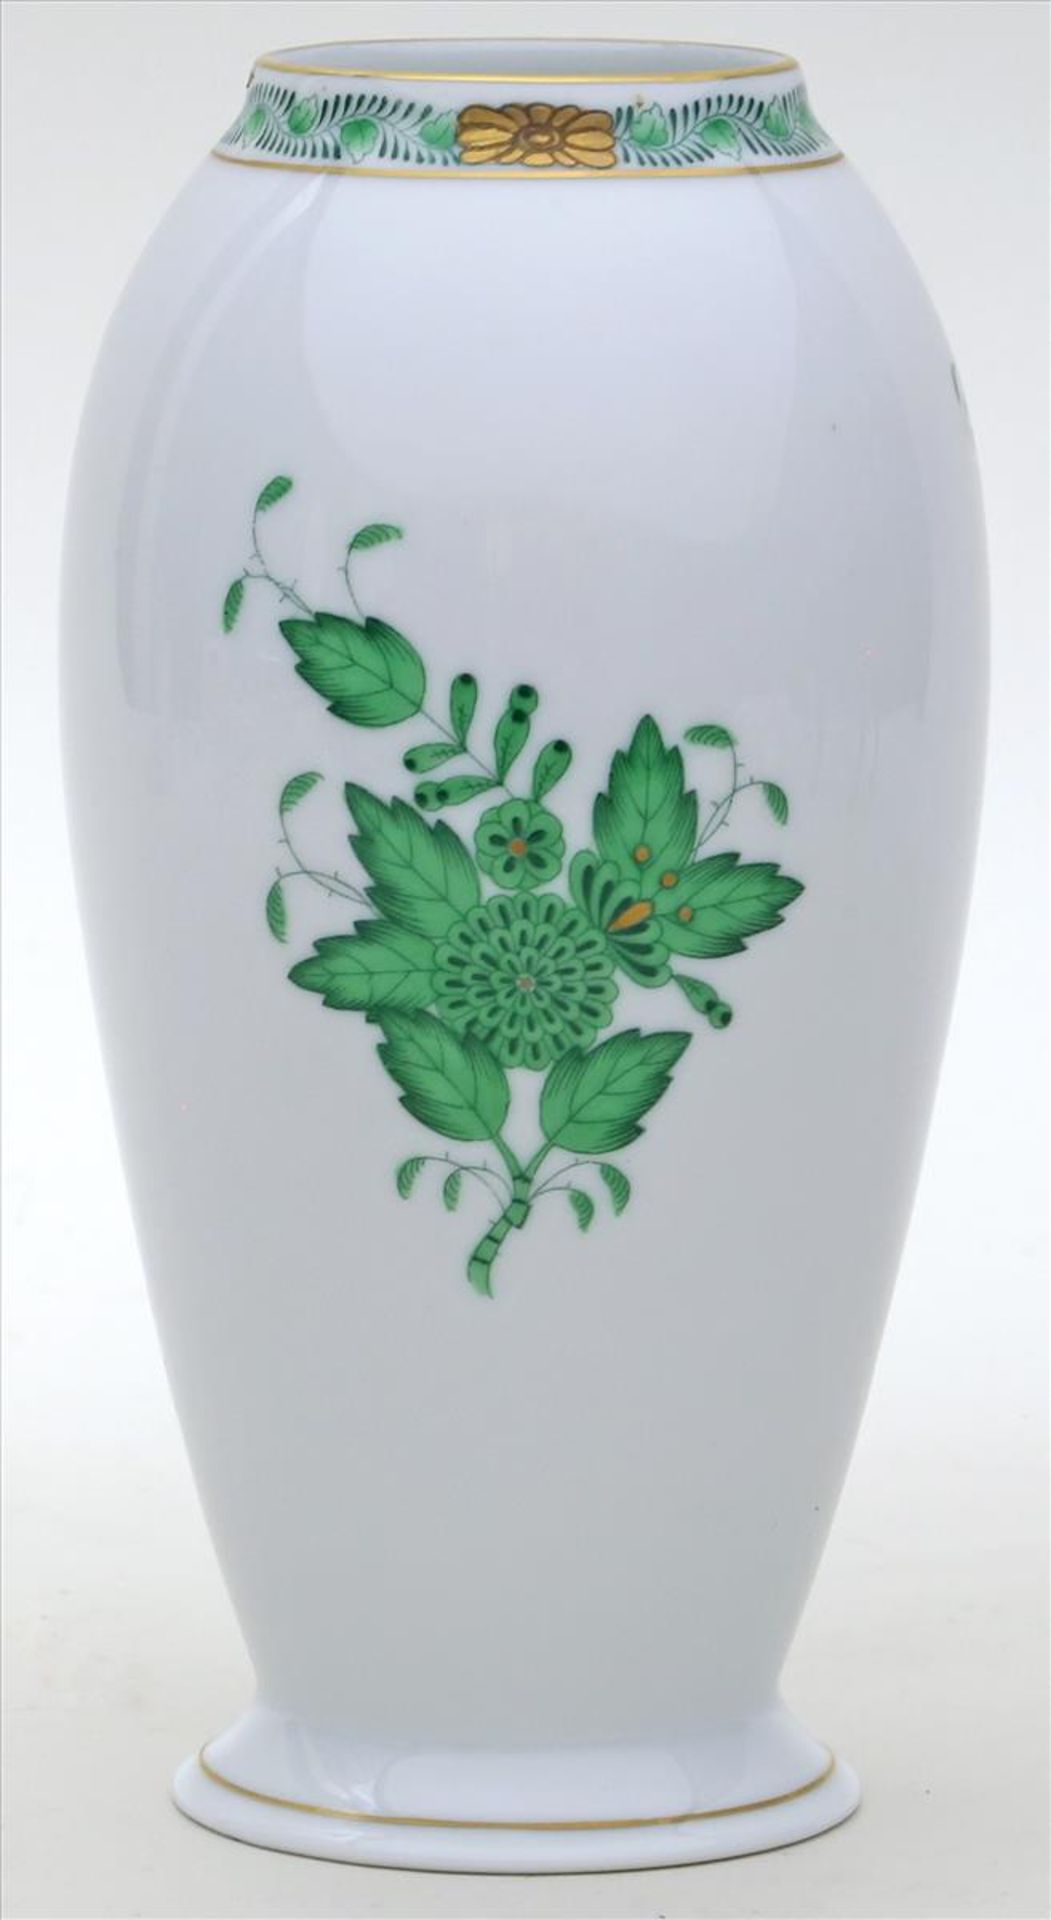 Vase, Herend.Porzellan. Bemalung "Apponyi" in Grün mit Goldstaffage. Herend, 20. Jh. 1. Wahl. H.